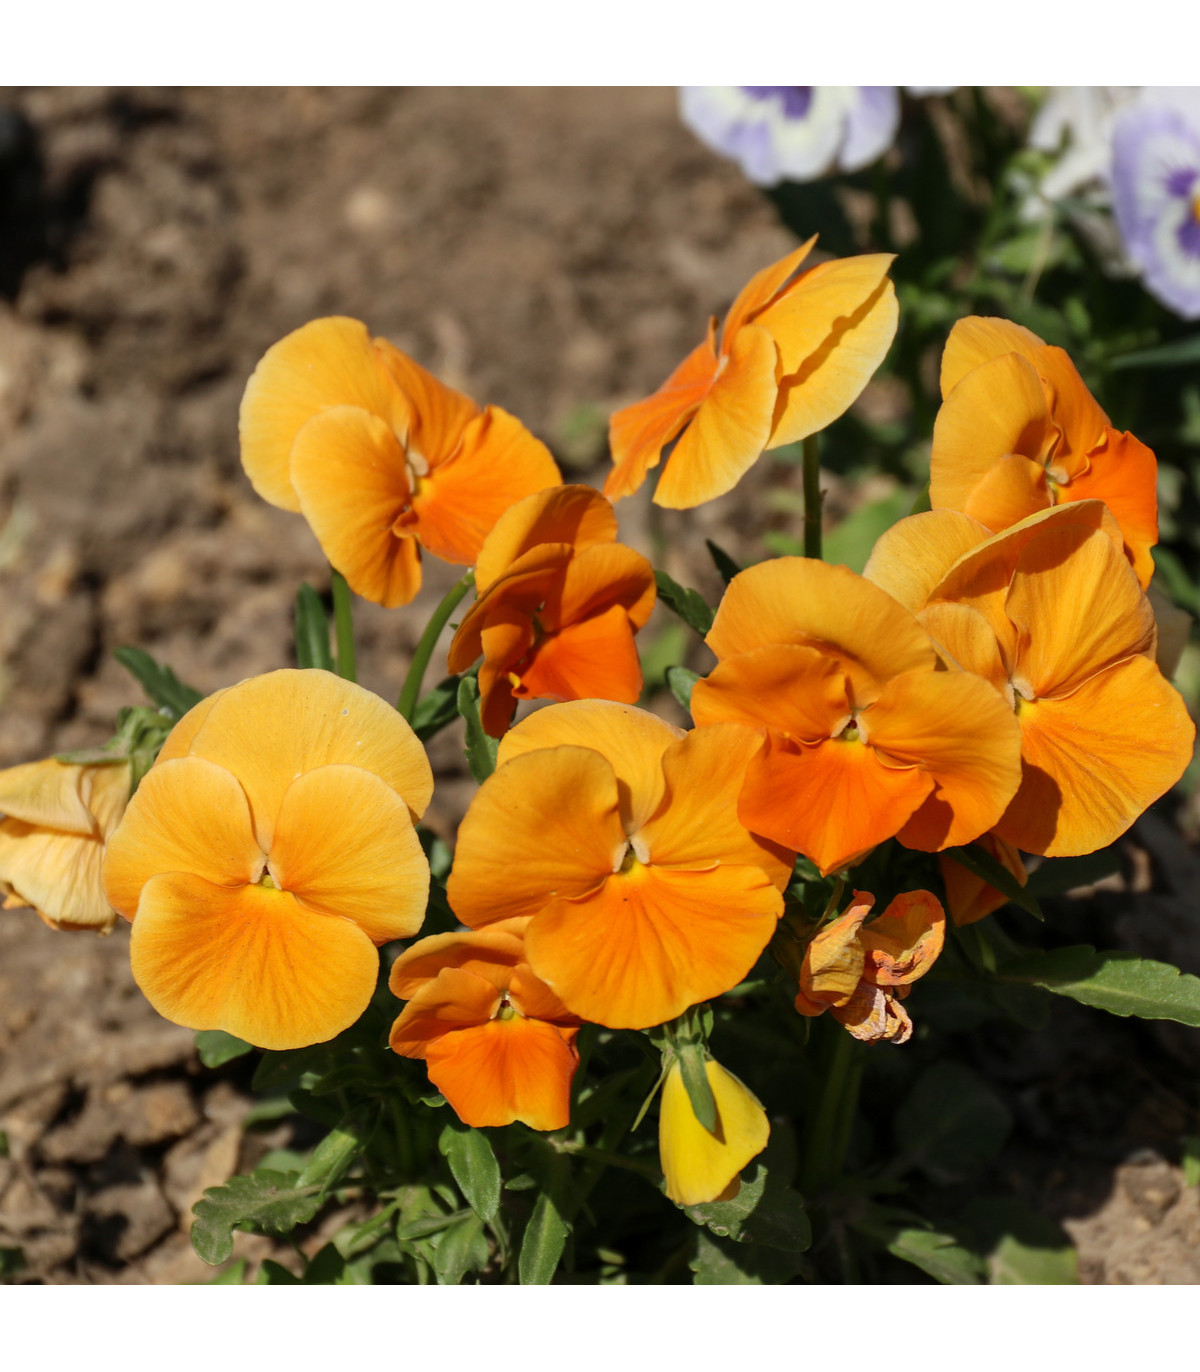 Maceška oranžová švýcarská Schweizer Riesen - Viola wittrockiana - osivo macešky - 0,3 g